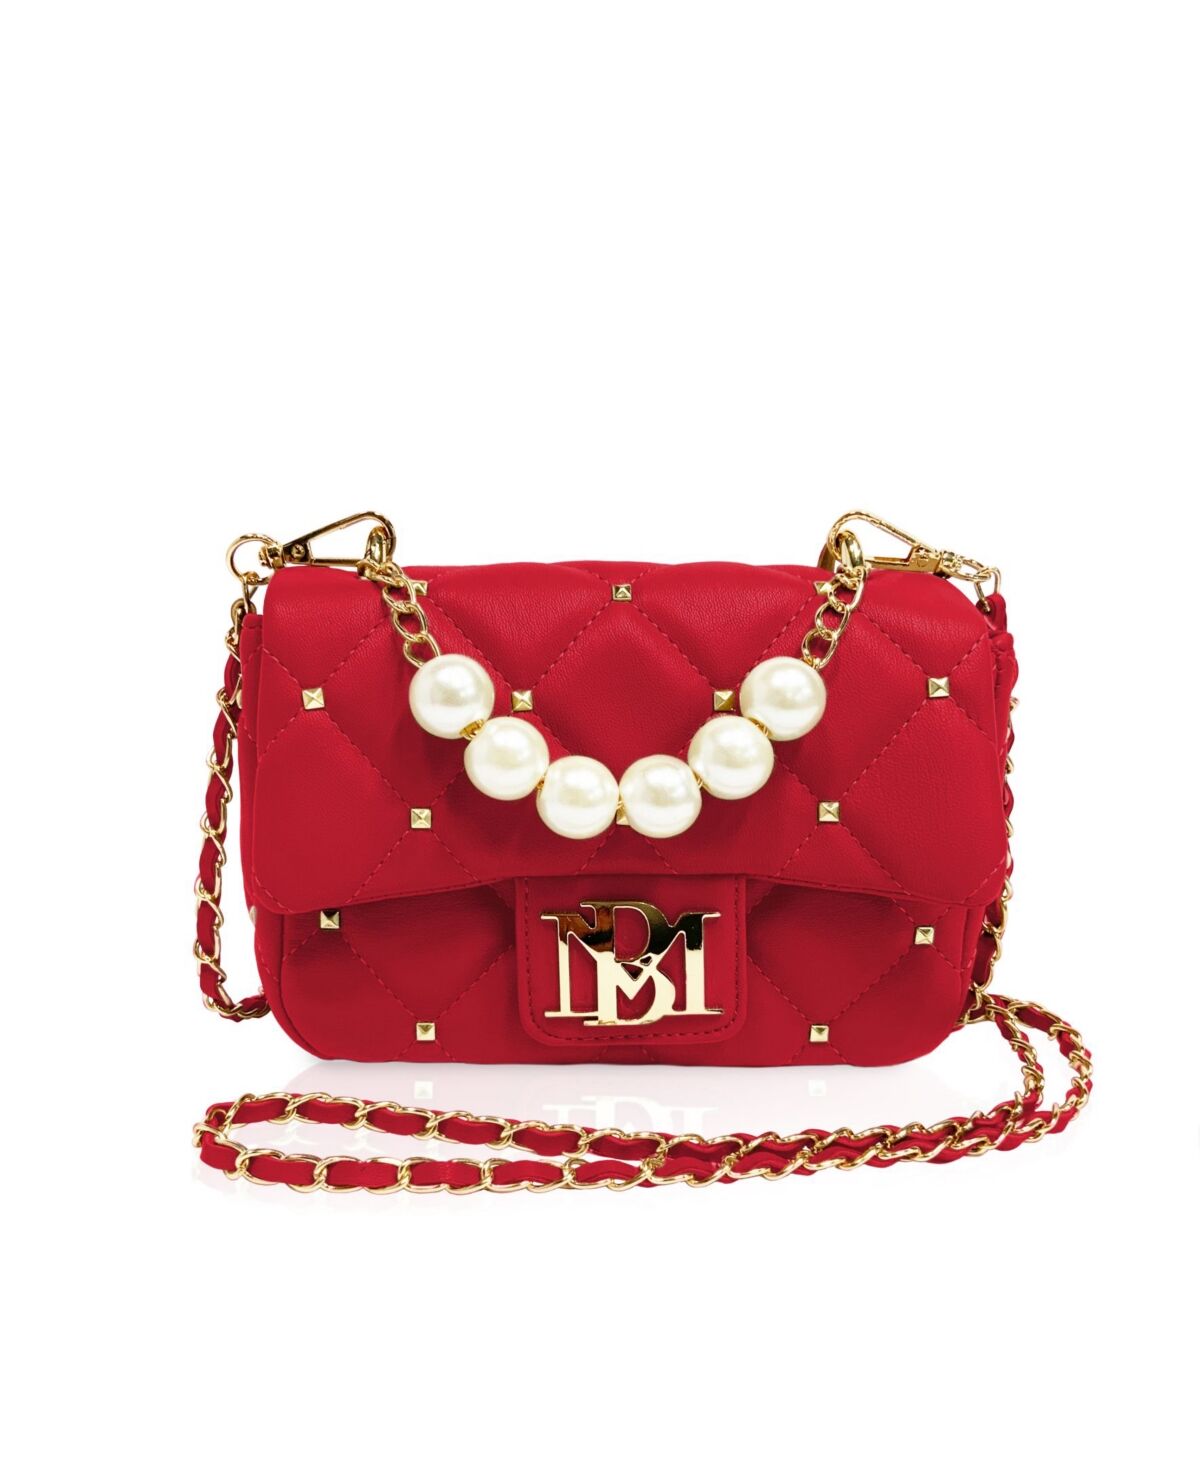 Badgley Mischka Women's Mini Flap Quilted Handbag - Red